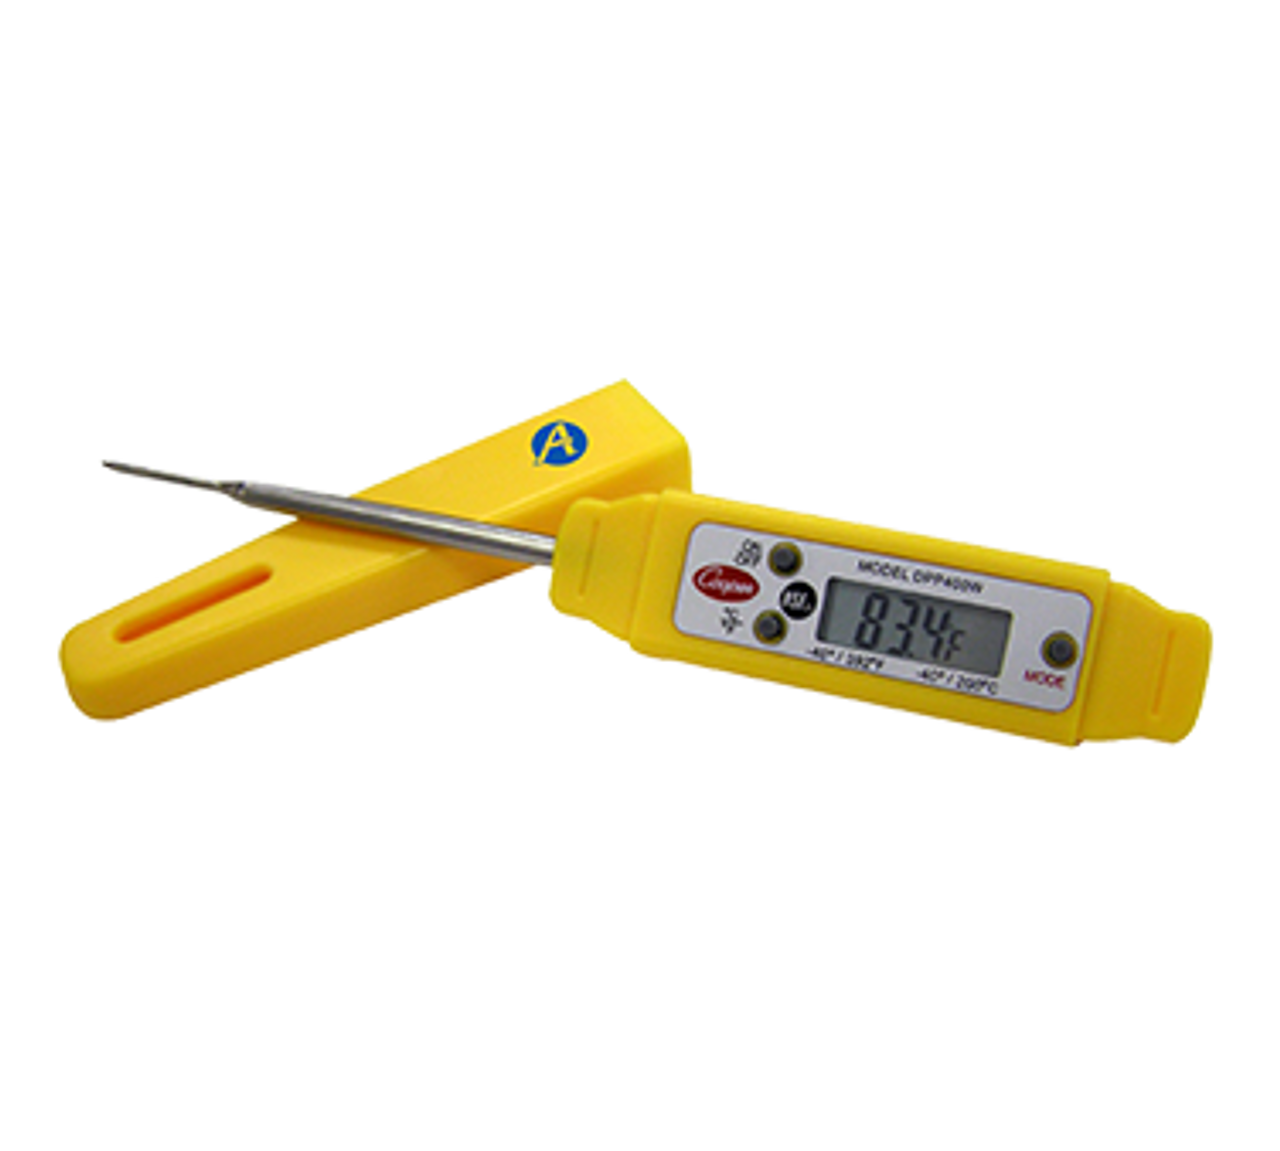 Cooper-Atkins DPP800W MAX Digital Pocket Test Thermometer